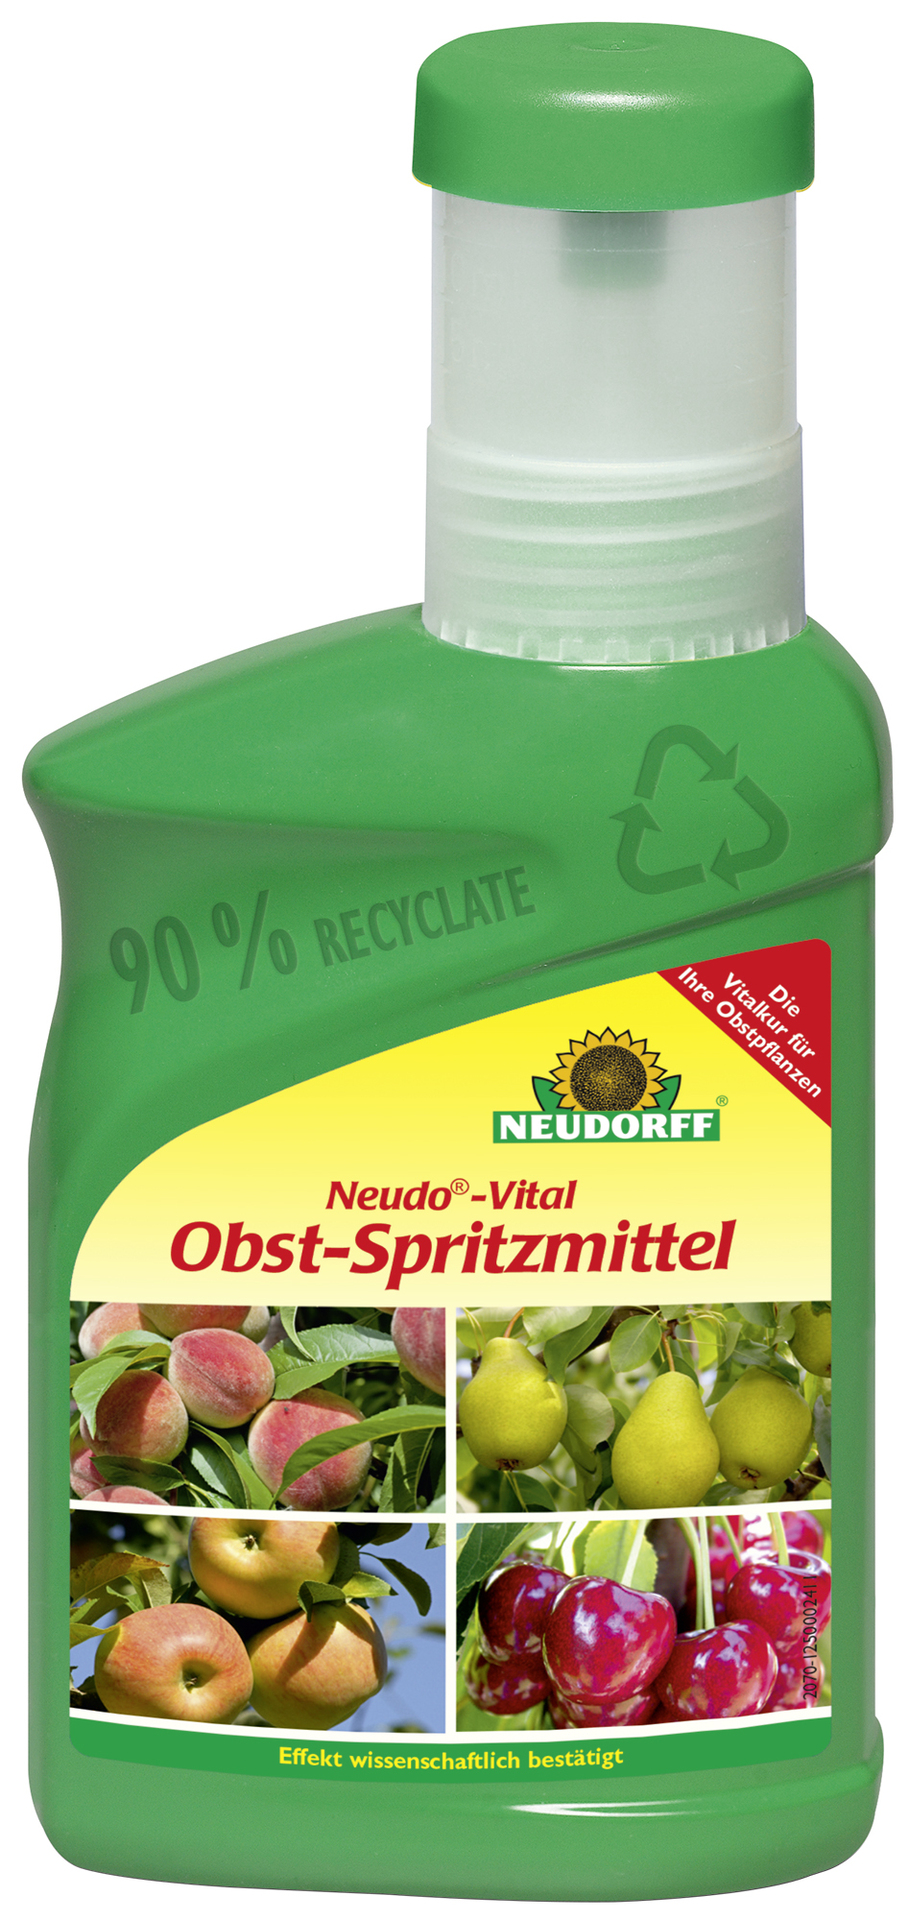 W. Neudorff GmbH KG Neudo-Vital Obst-Spritzmittel